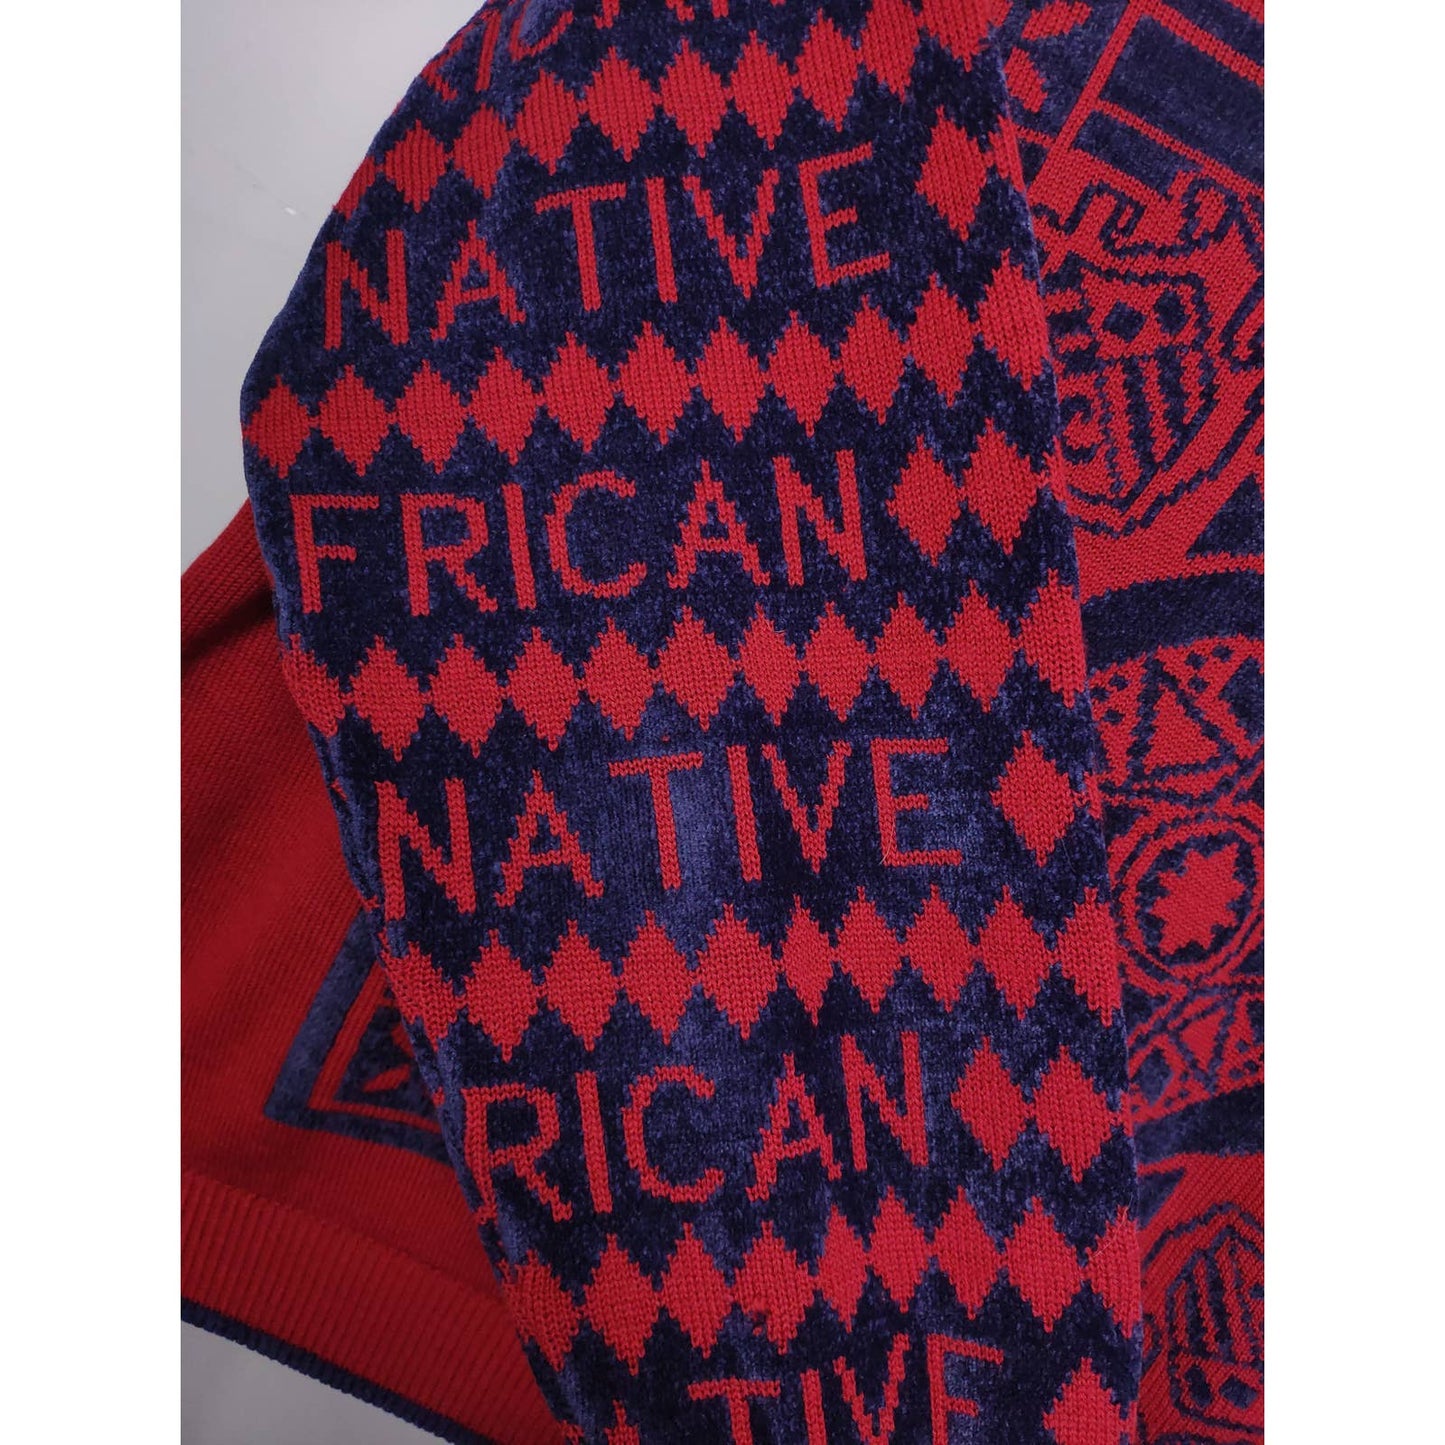 Modigliani Italian Designer sweater african red Coogi style